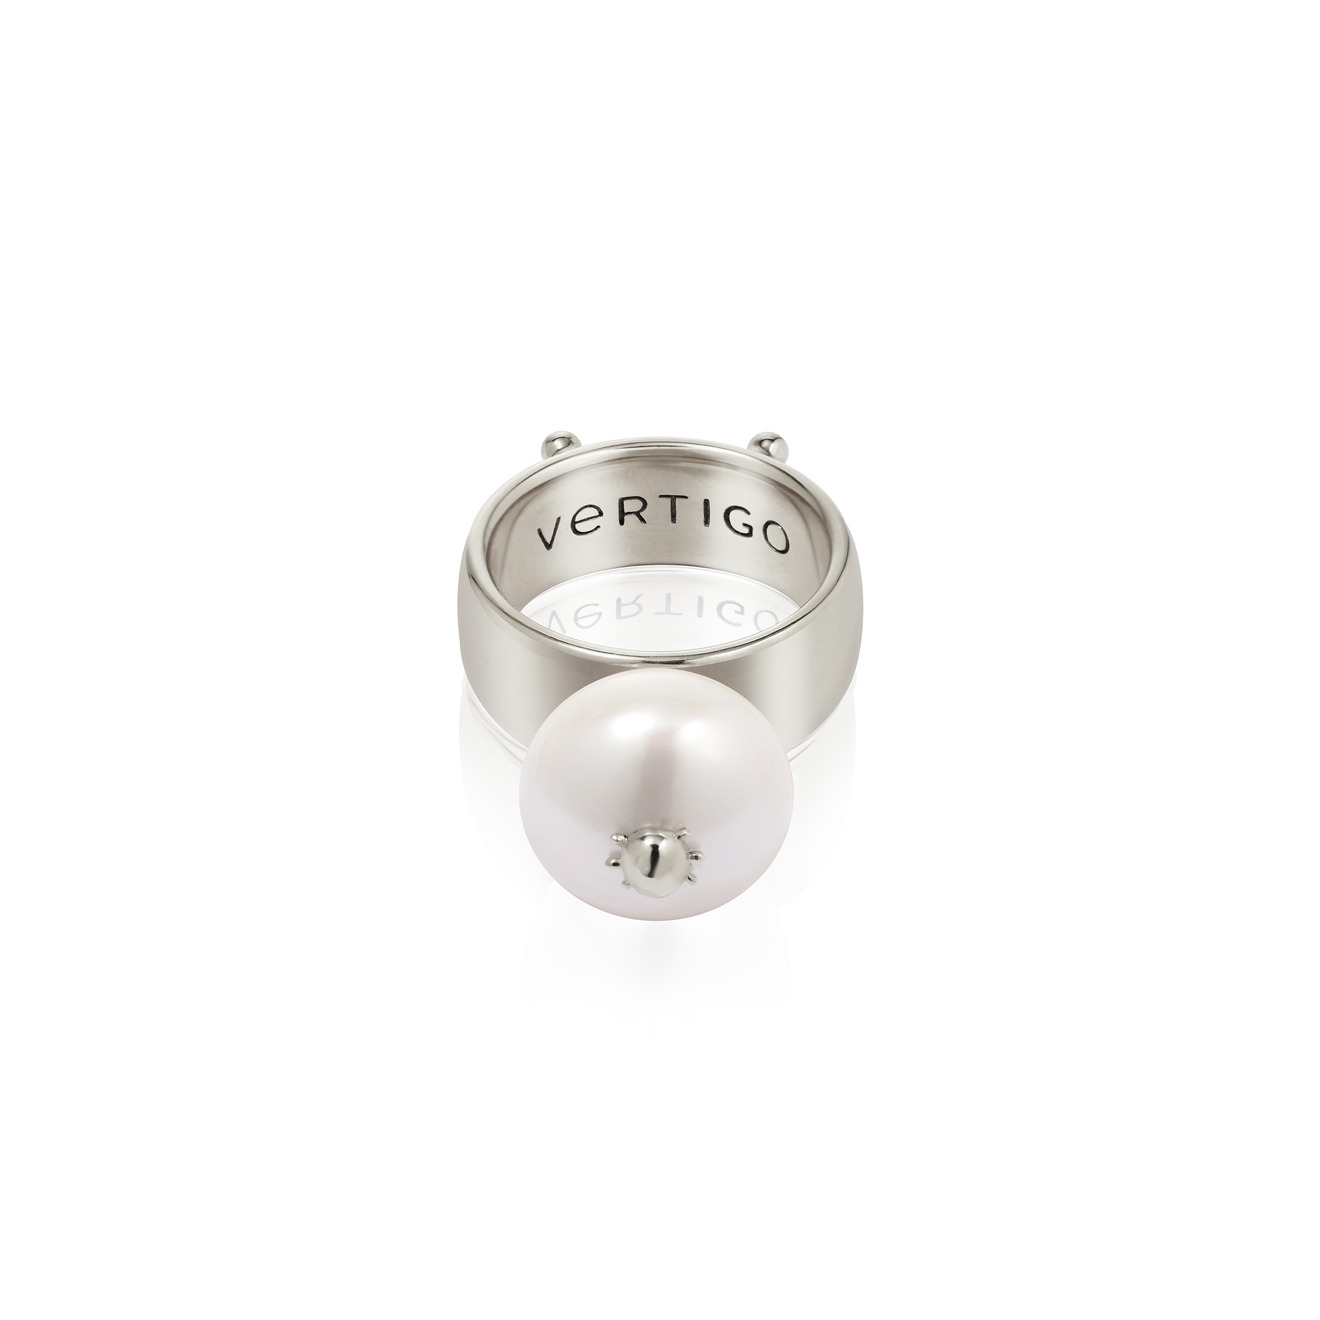 Vertigo Jewellery Lab Кольцо СLEOPTR LADYBUG RING из серебра с речным жемчугом